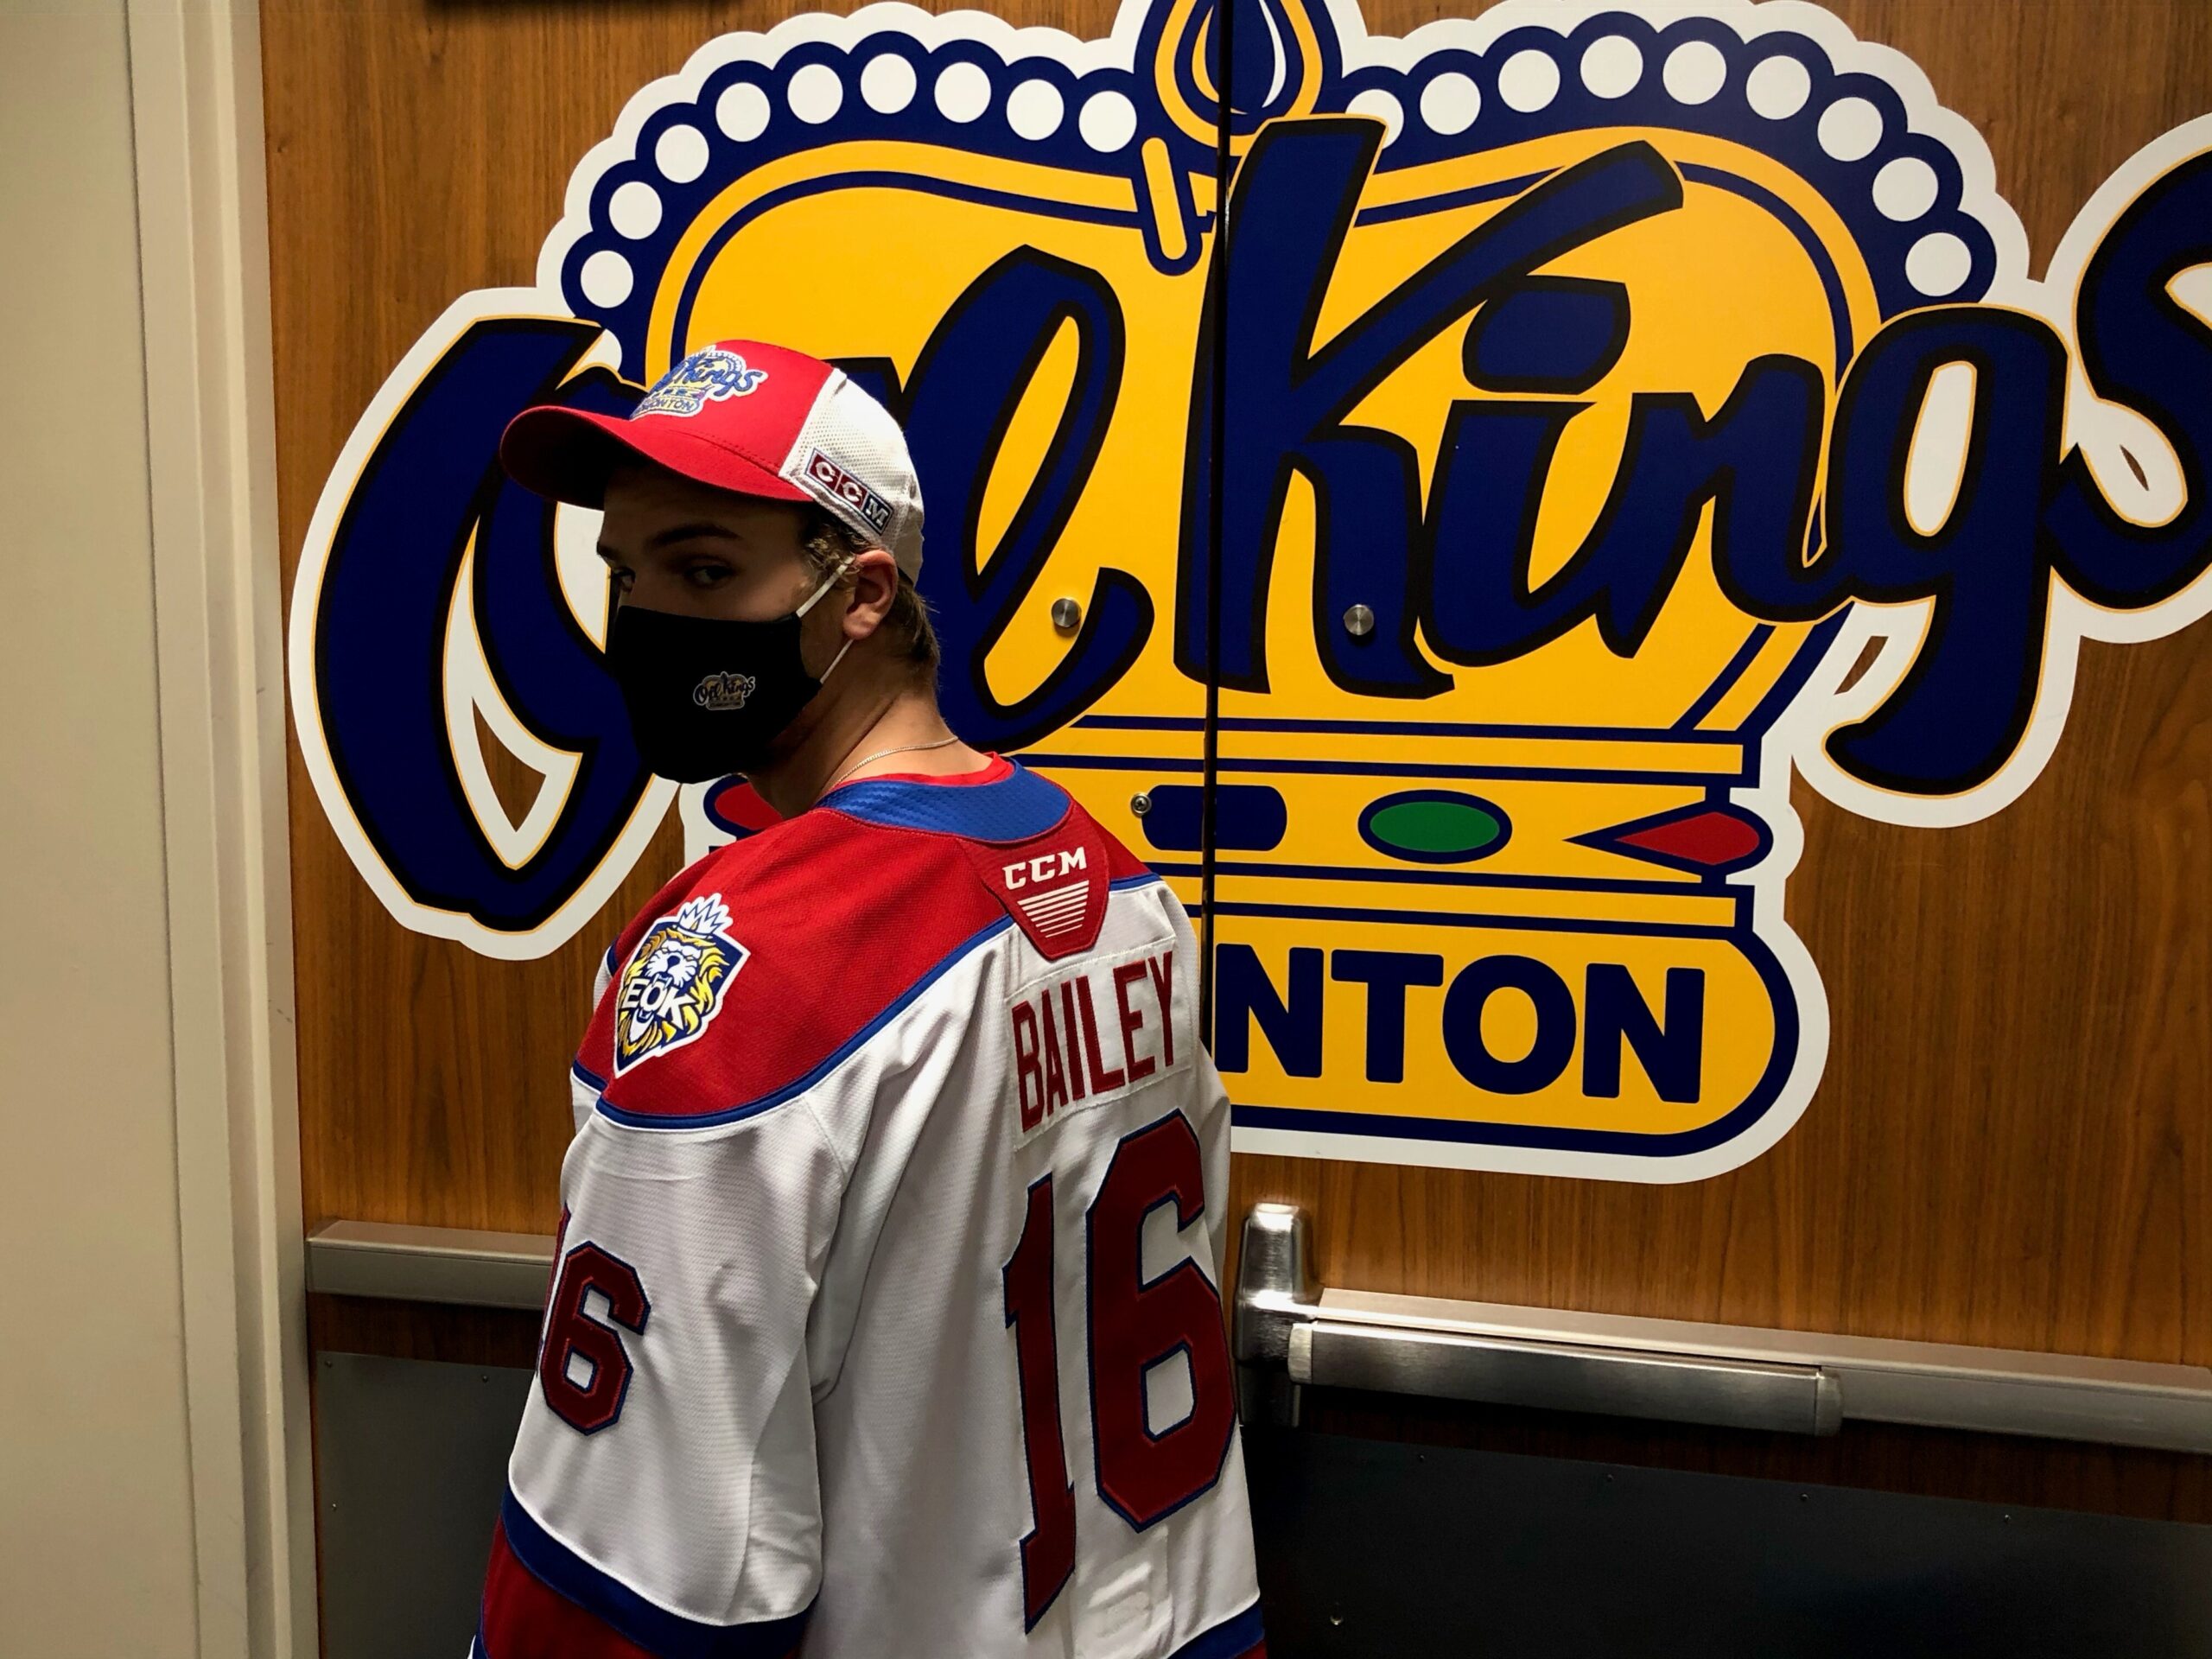 Edmonton Oil Kings Defunct Team Hockey Jersey